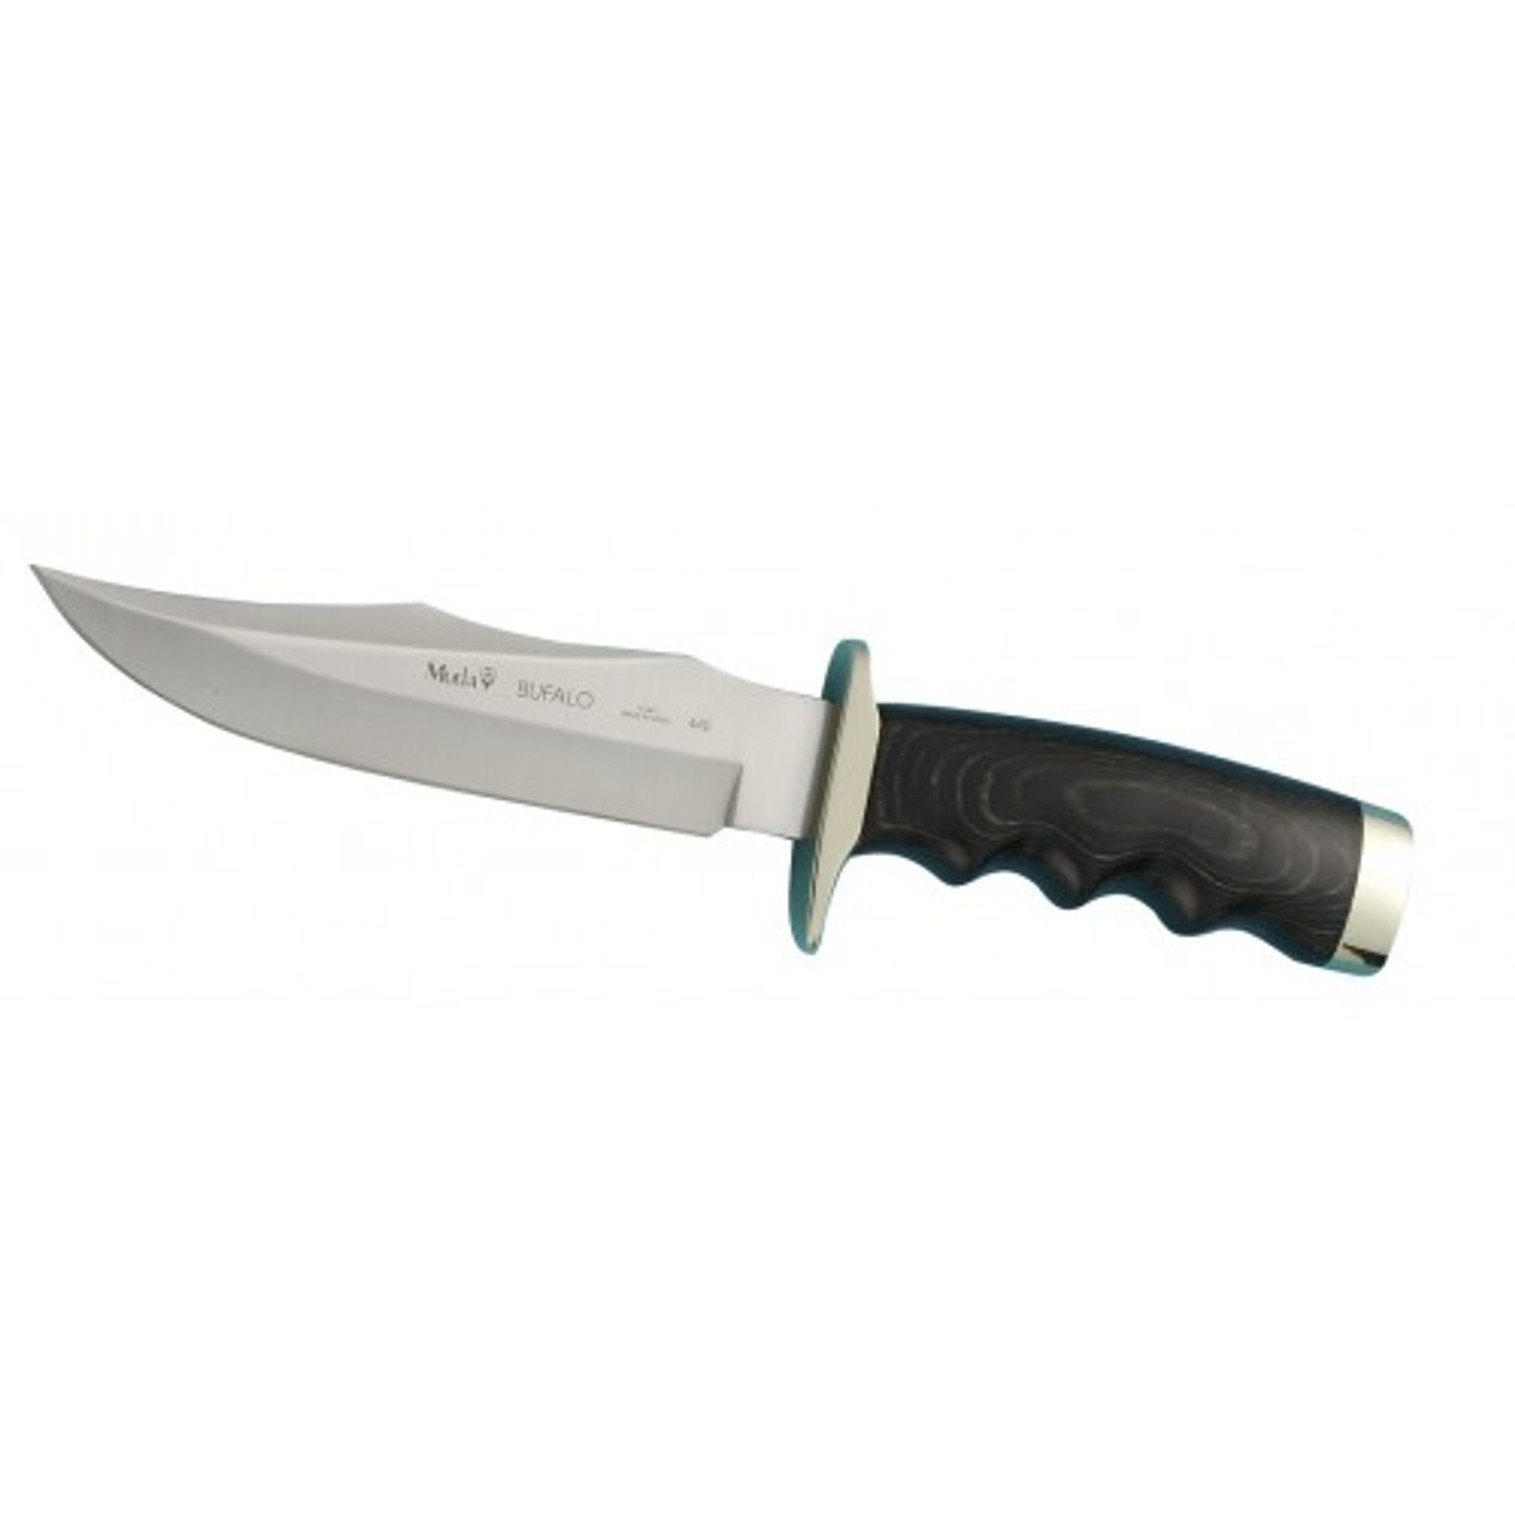 MUELA BUFALO-17M, X50CrMoV15, 6-1/2" Fixed Blade Hunting Knife, Black Pakkawood Handle